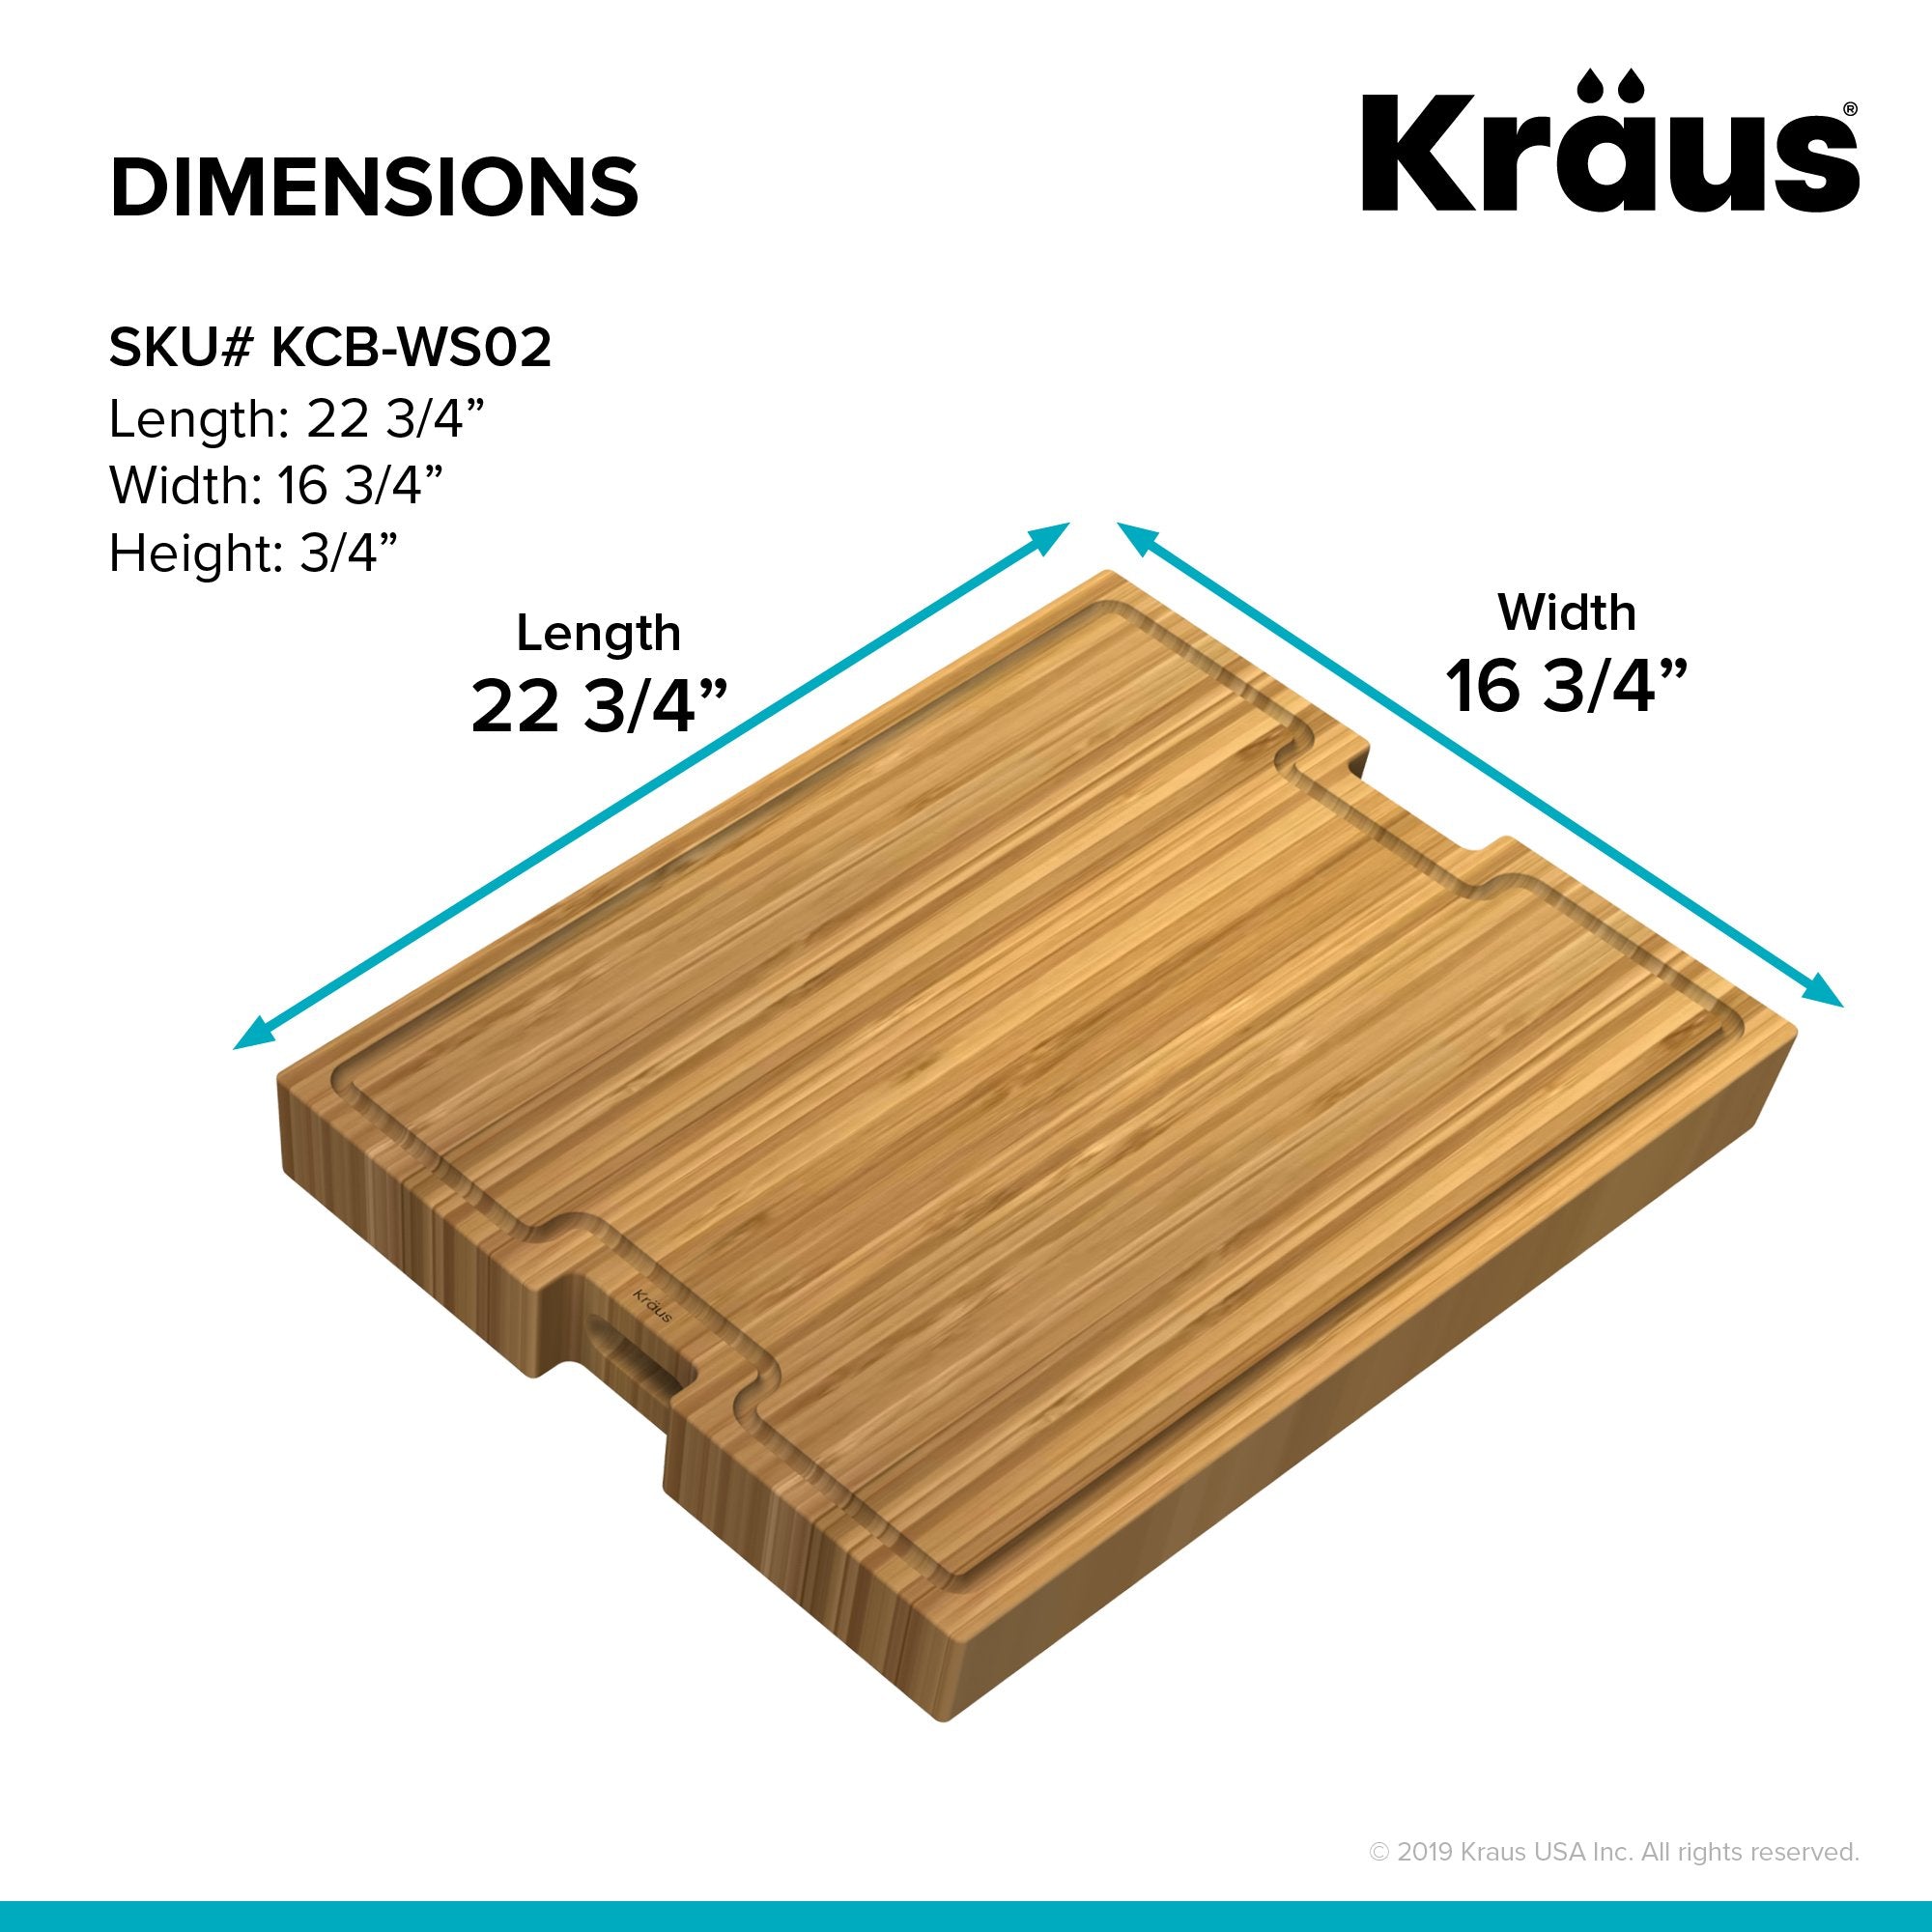 KRAUS Workstation Kitchen Sink Solid Bamboo Cutting Board/Serving Board 